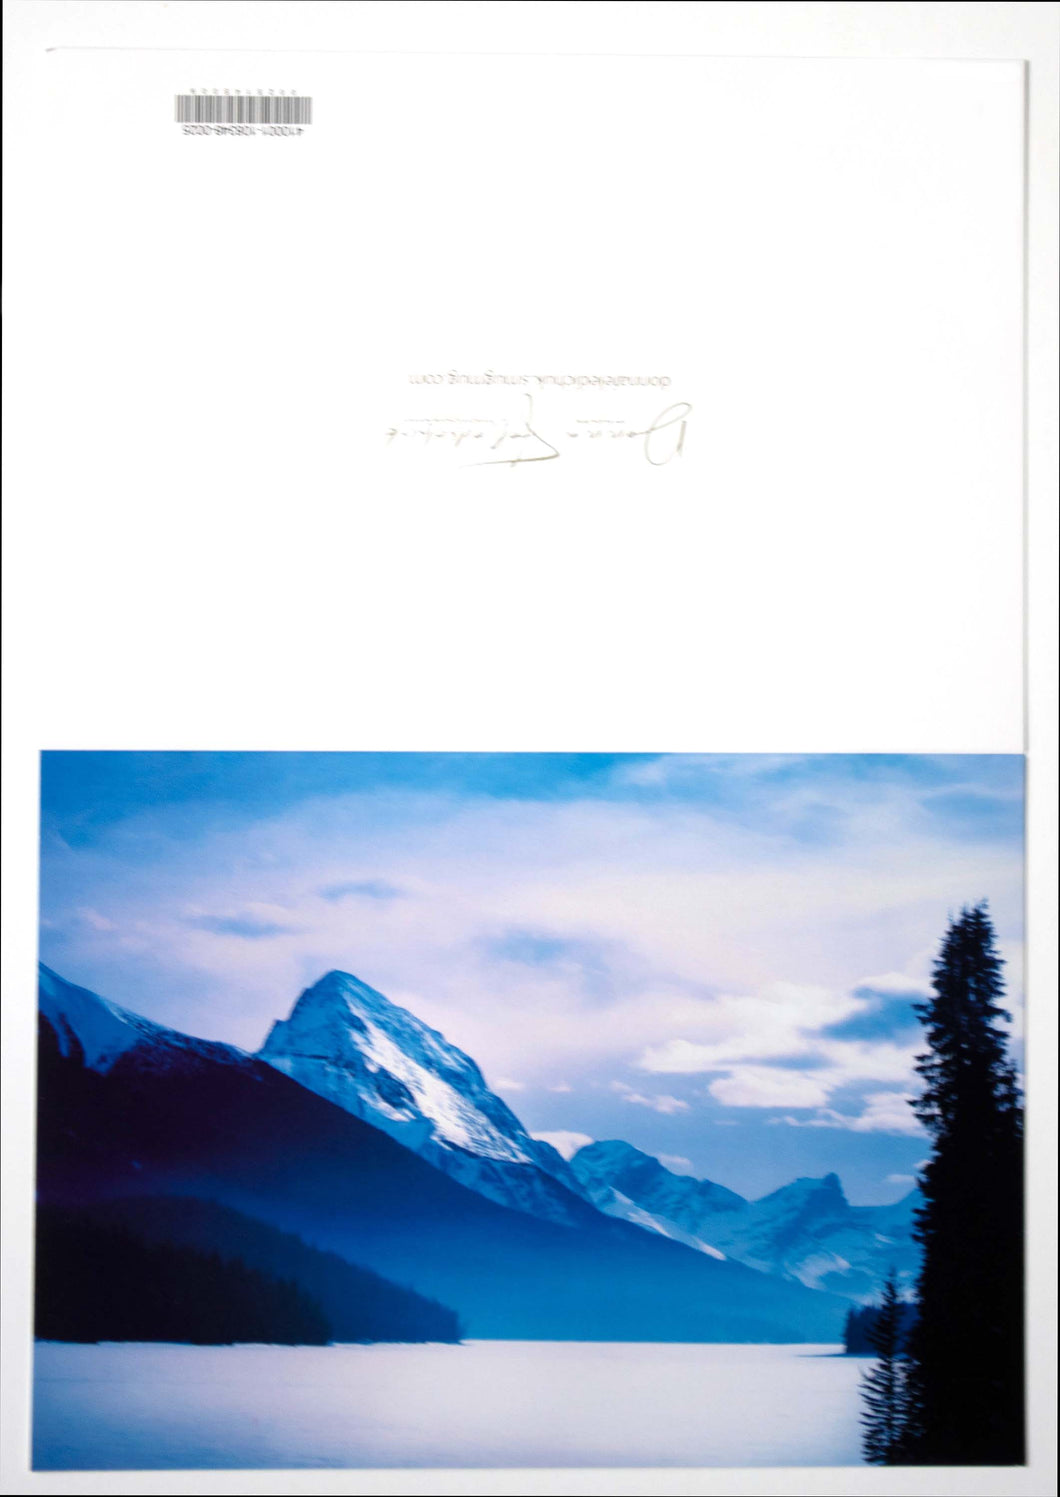 A fine art nature photography greeting card of Maligne Lake at Jasper